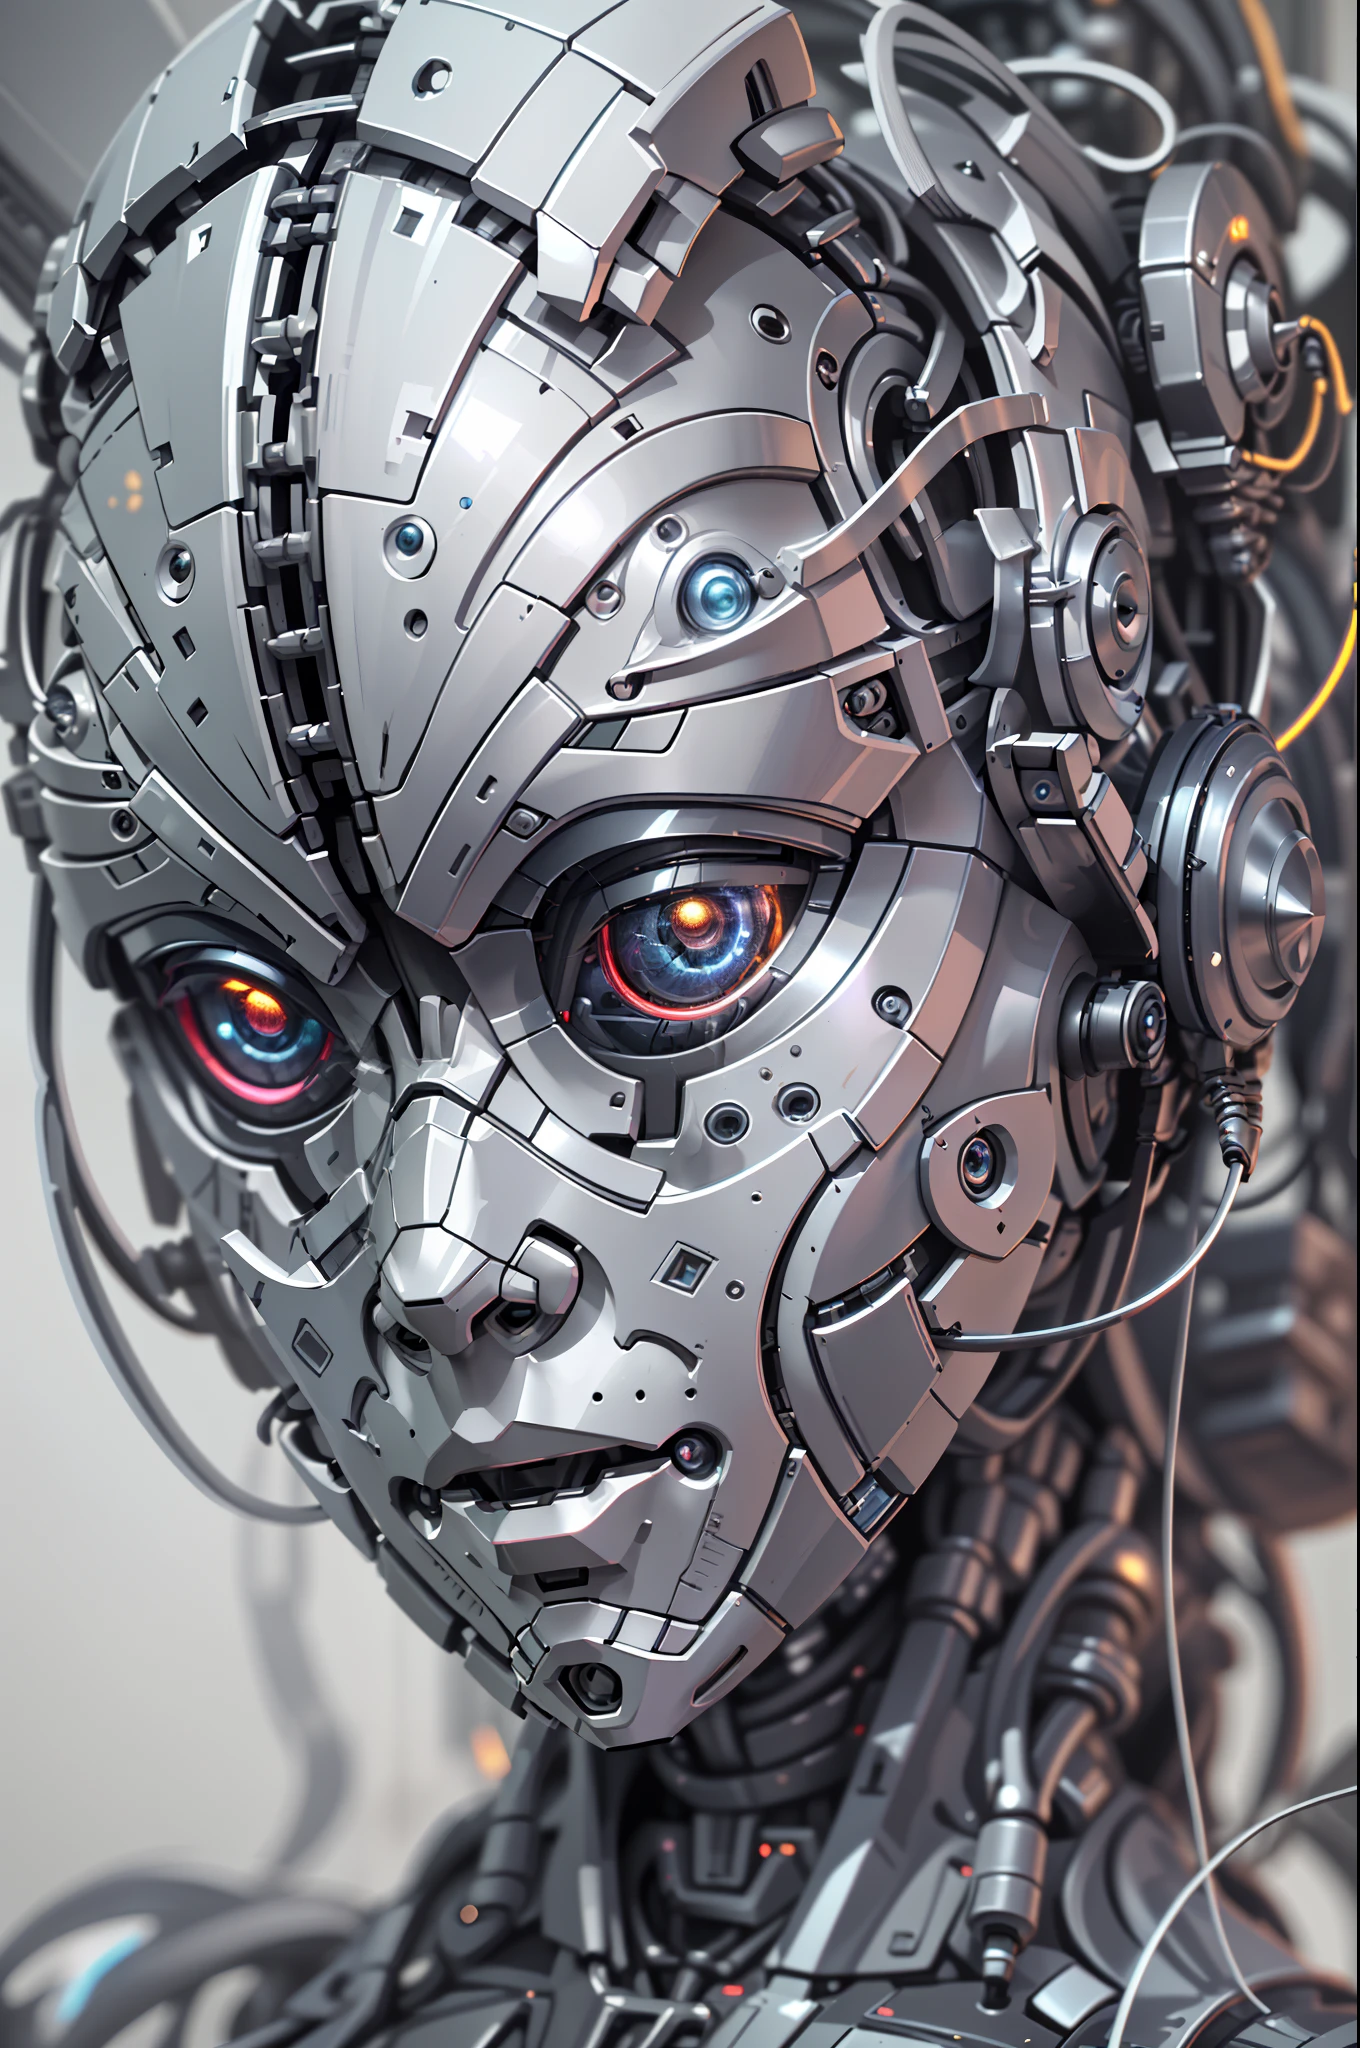 Intricate 3d rendering of highly detailed beautiful ceramic silhouette female ロボット face, ロボット, ロボット part, 150ミリメートル, 美しいスタジオの柔らかな光, リムライト, 鮮やかなディテール, 豪華なサイバーパンク, レース, シュール, 解剖学, 顔の筋肉, ケーブル ワイヤー, マイクロチップ, エレガント, 美しい背景, オクタンレンダリング, HRギーガースタイル, 8k, 最高品質, 傑作, 図, とても繊細で美しい, 非常に詳細, CG, 団結, 壁紙 , (忠実さ, 忠実さ: 1.37), すばらしい, 細かい部分, 傑作, 最高品質, 公式アート, extremely detailed cg 団結 8k 壁紙, 不条理, unbelievably 不条理, ロボット, 銀色のヘルメット, 全身, 座って書く